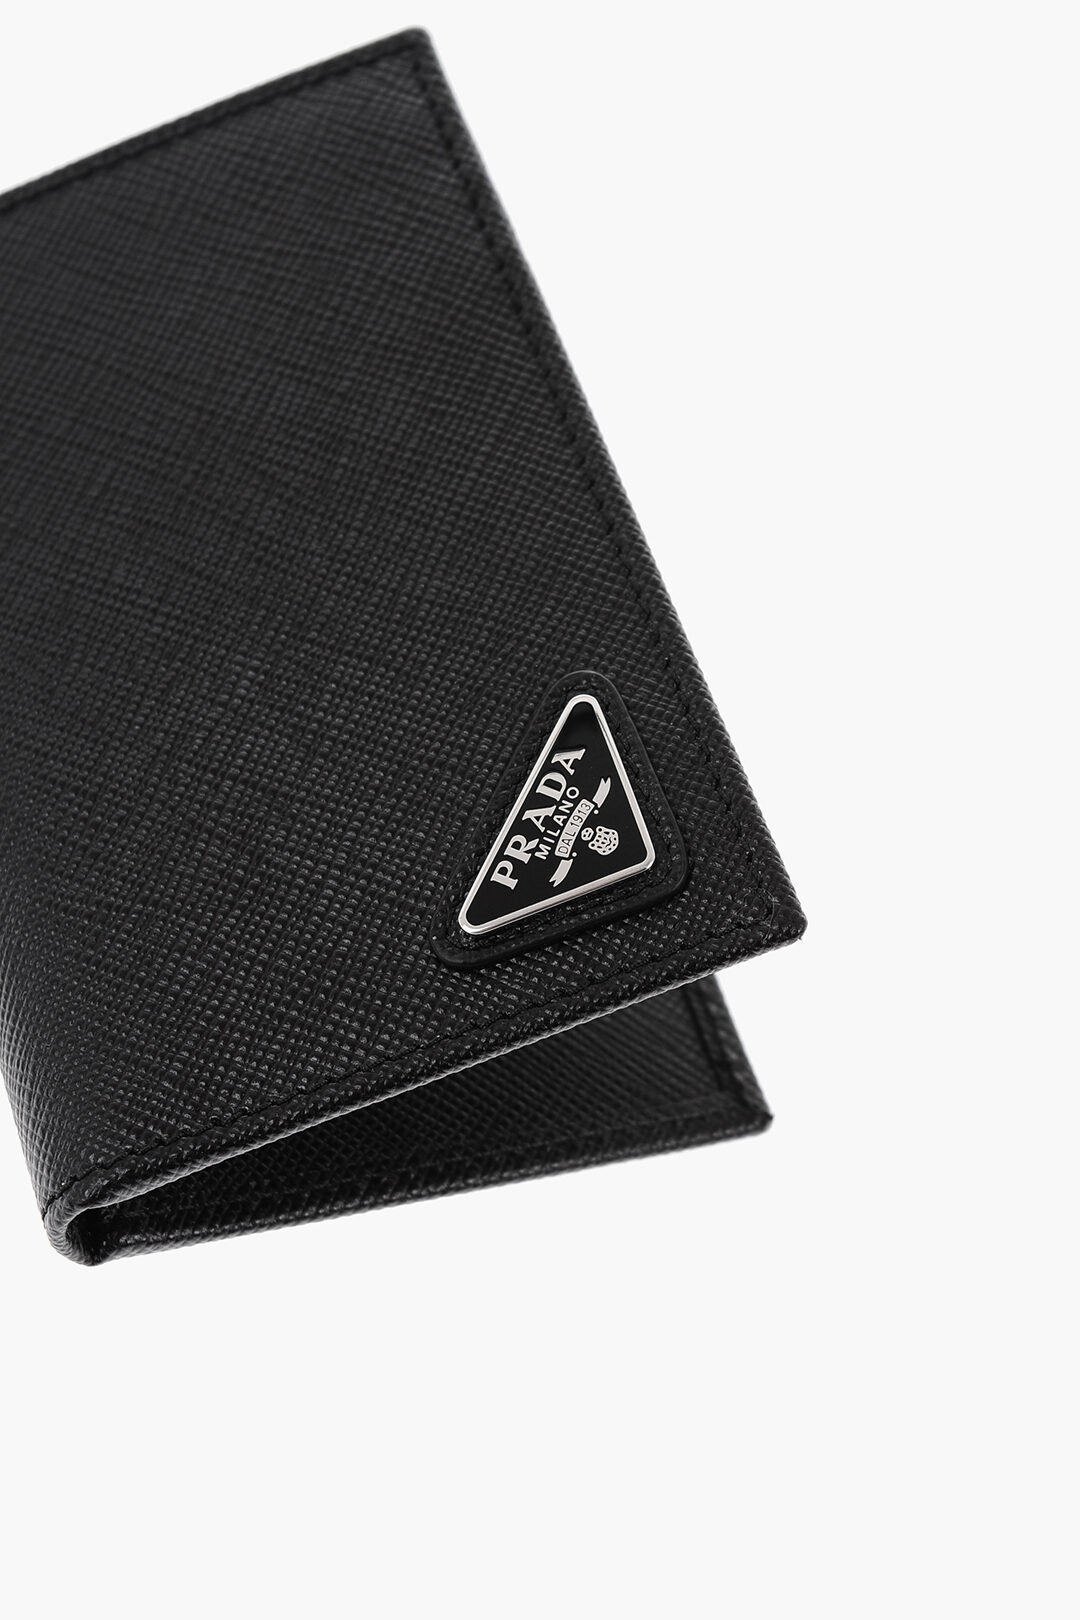 Prada Saffiano Leather Card Folder men - Glamood Outlet